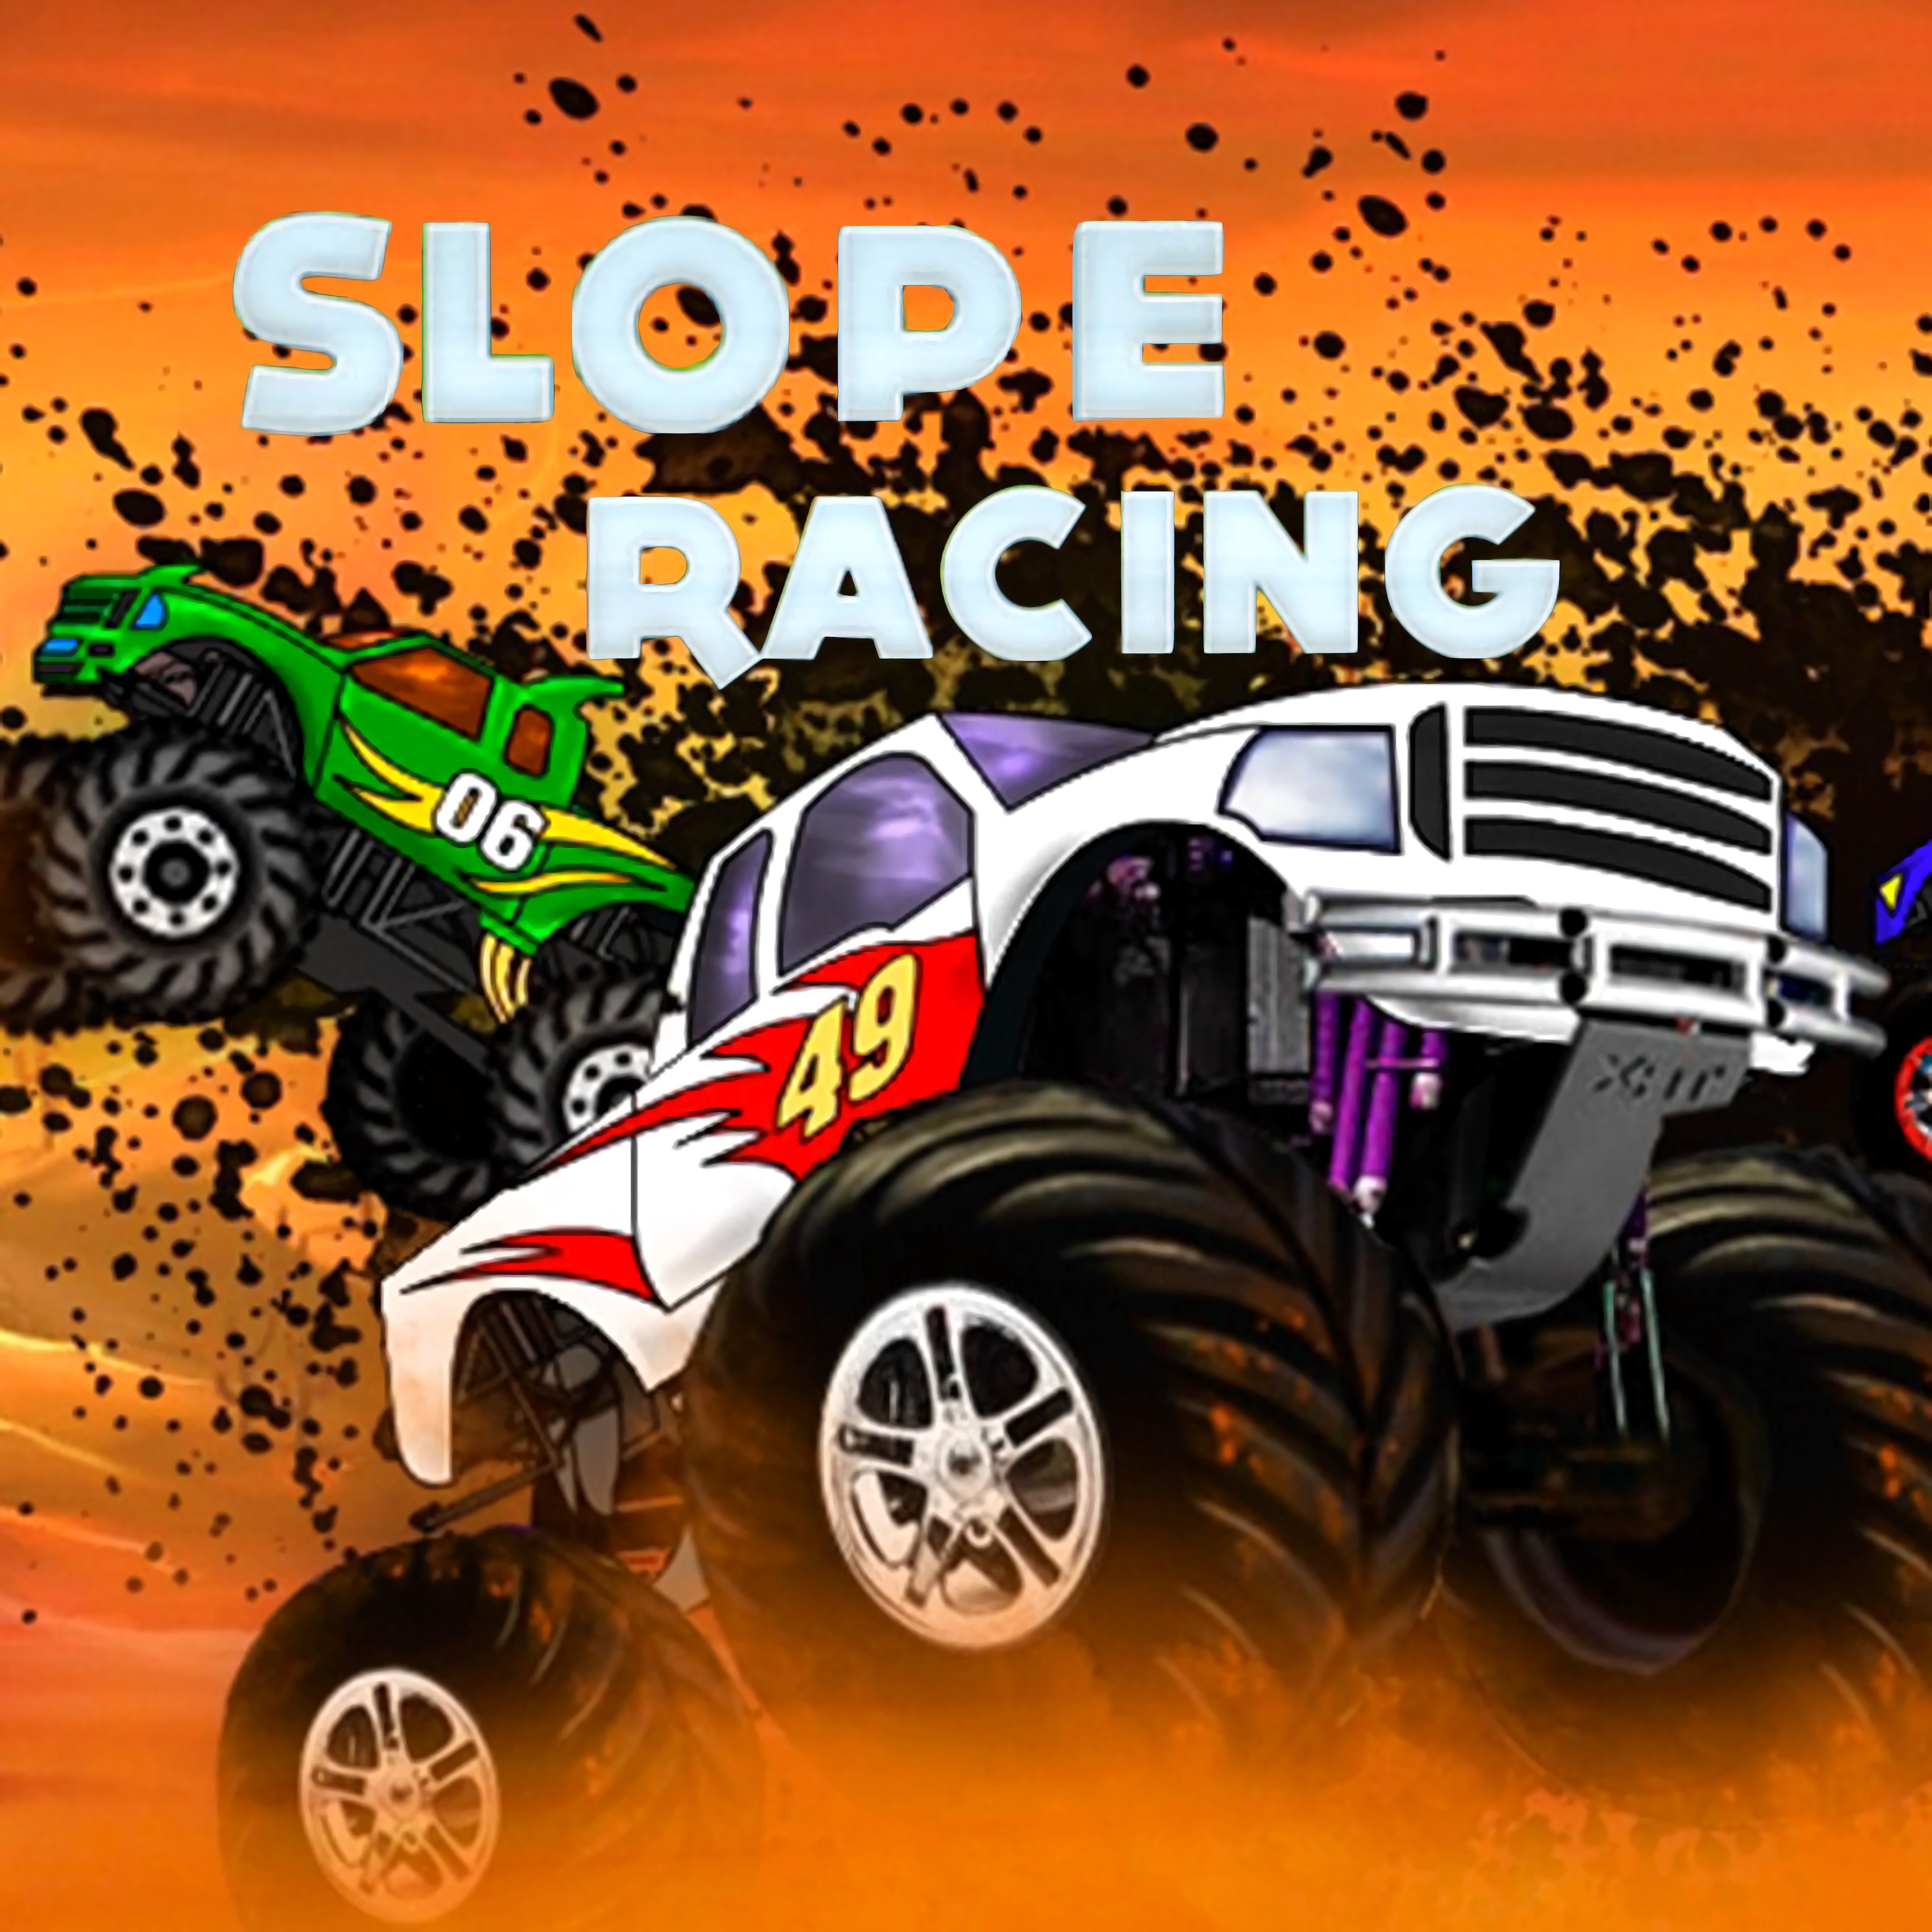 Slope Racing